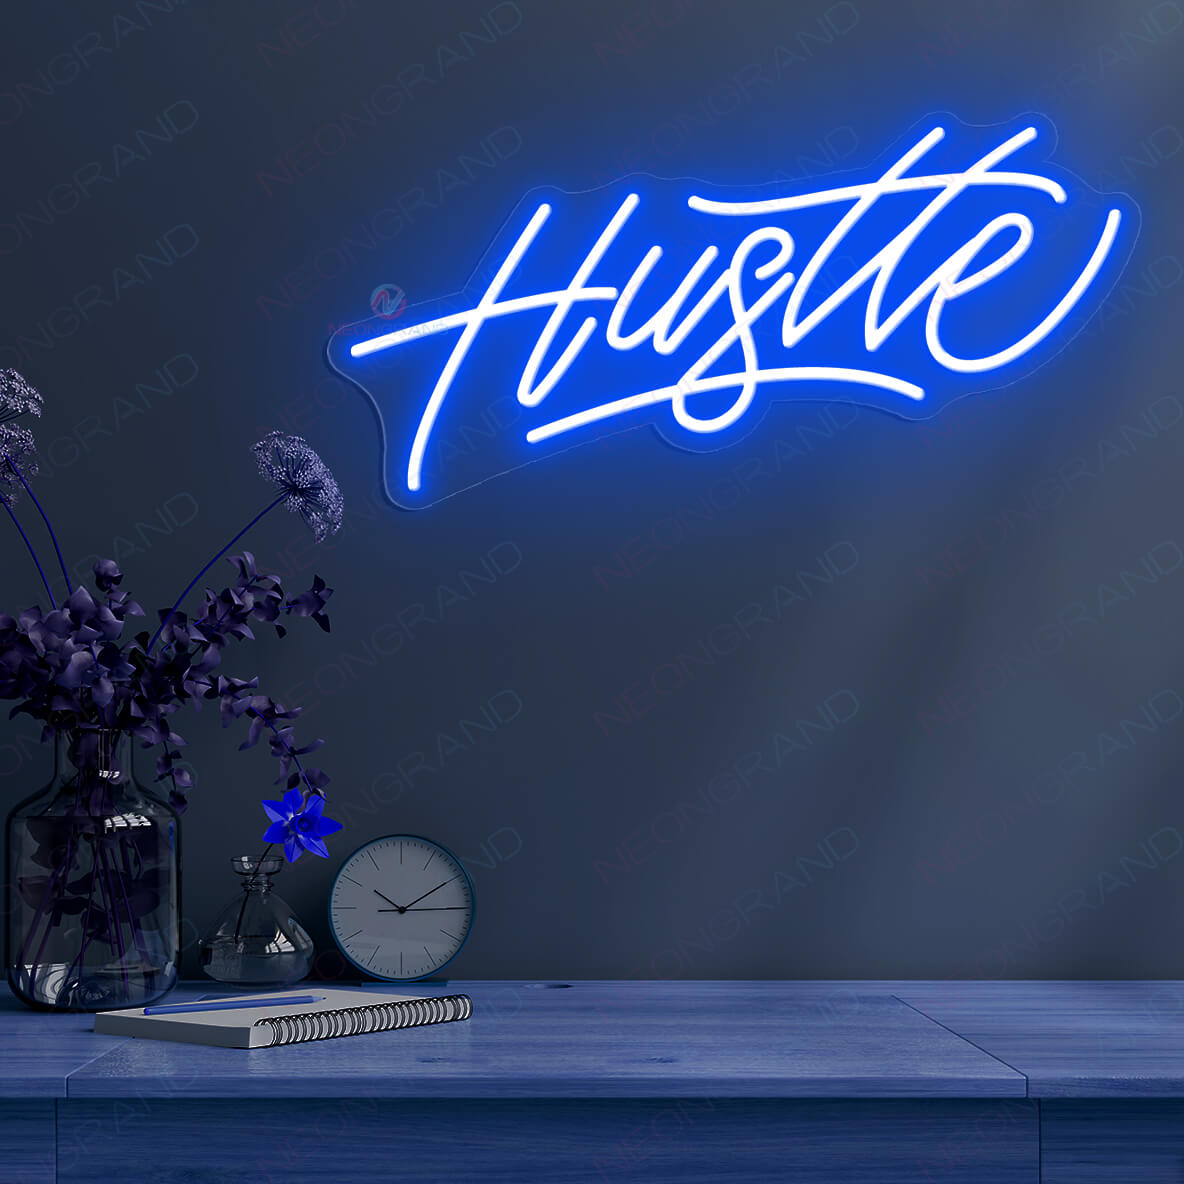 Hustle Neon Sign Wall Led Light blue